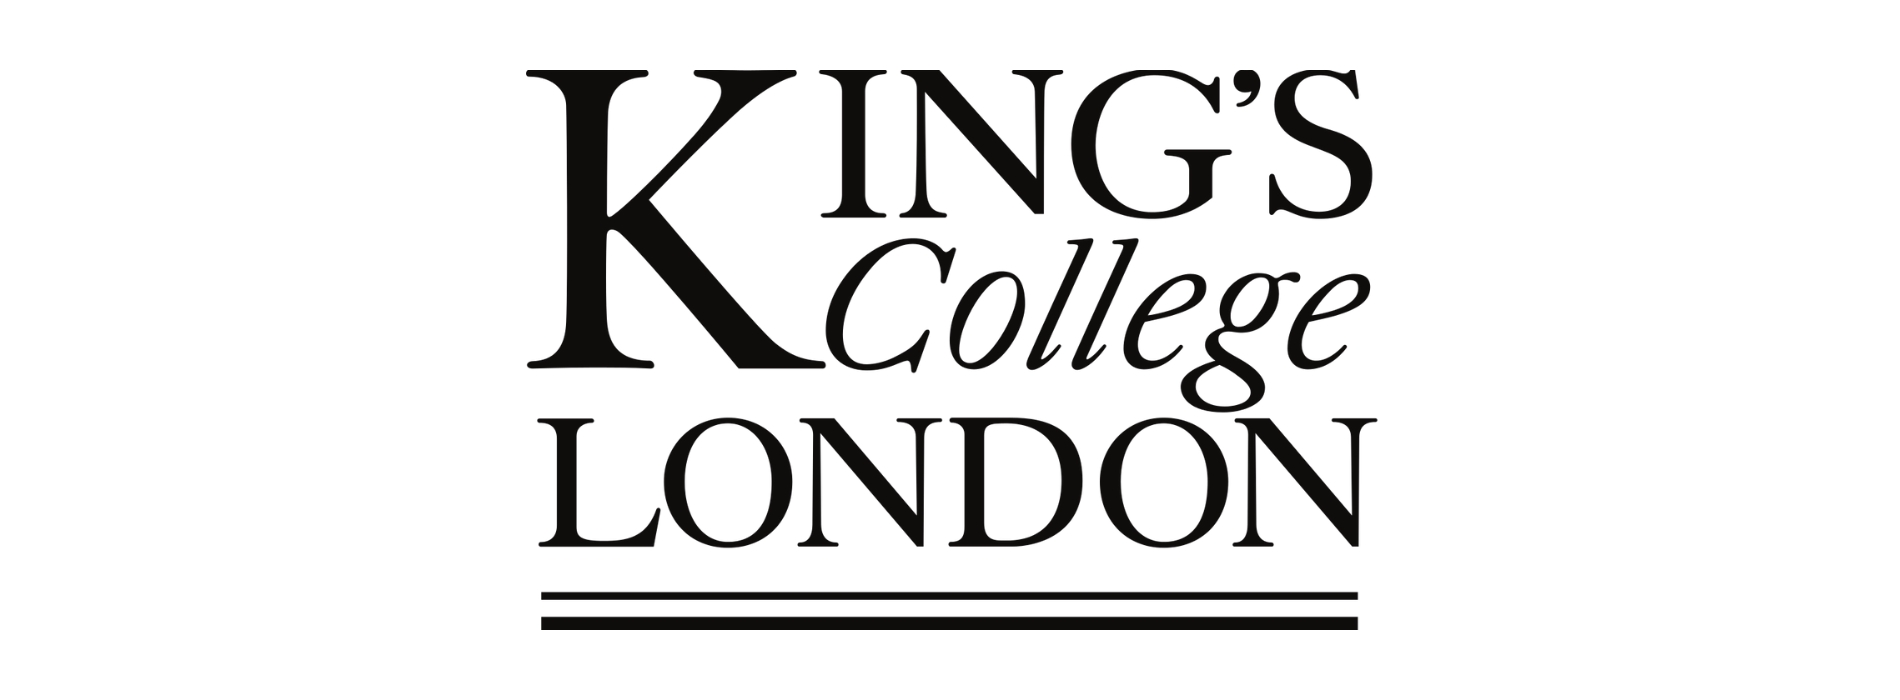 king's college london logo